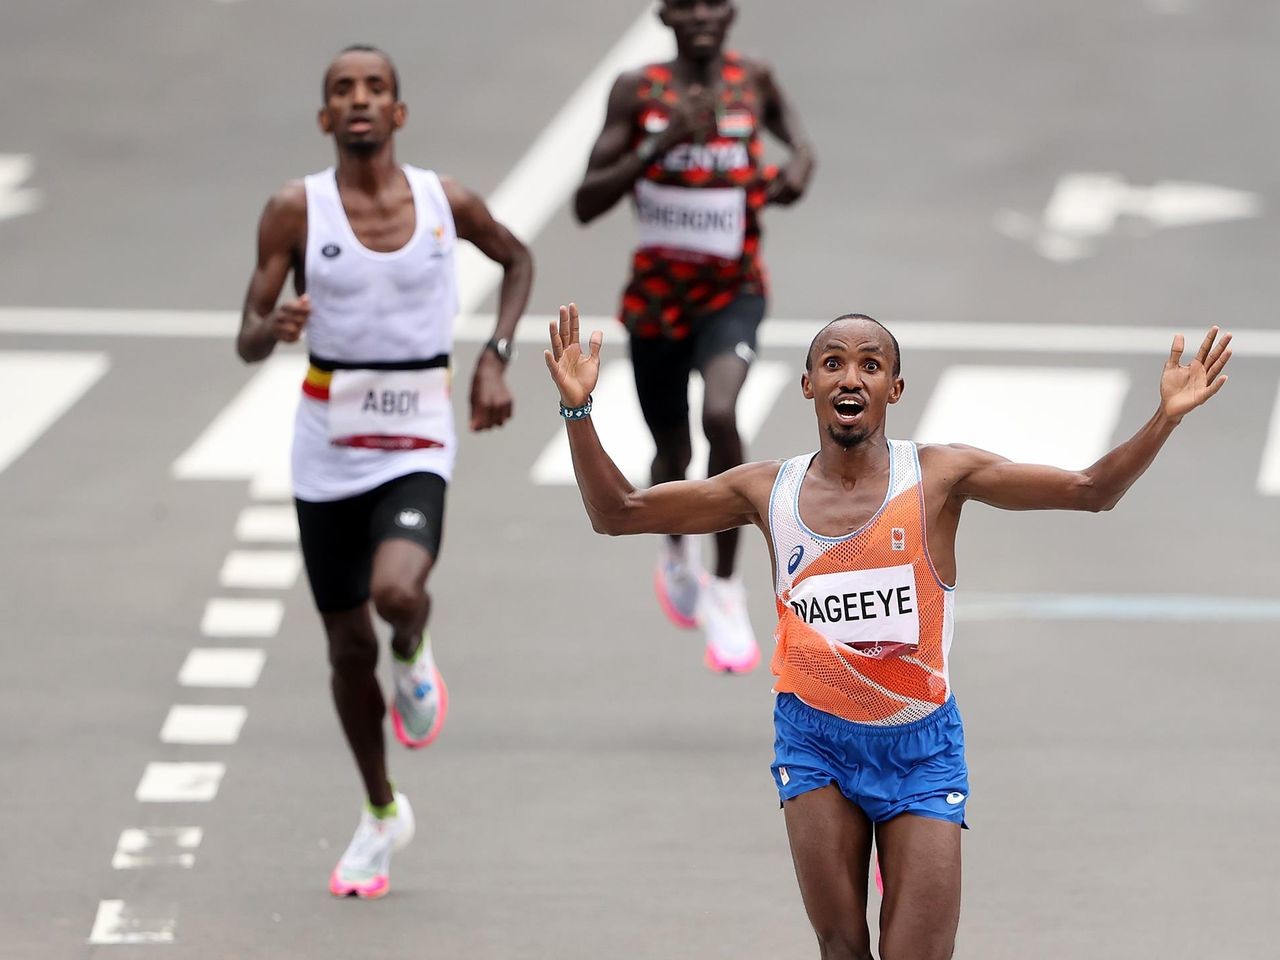 Olympic medalist Abdi Nageeye, Kibiwott Kandie and Kenenisa Bekele to clash in New York